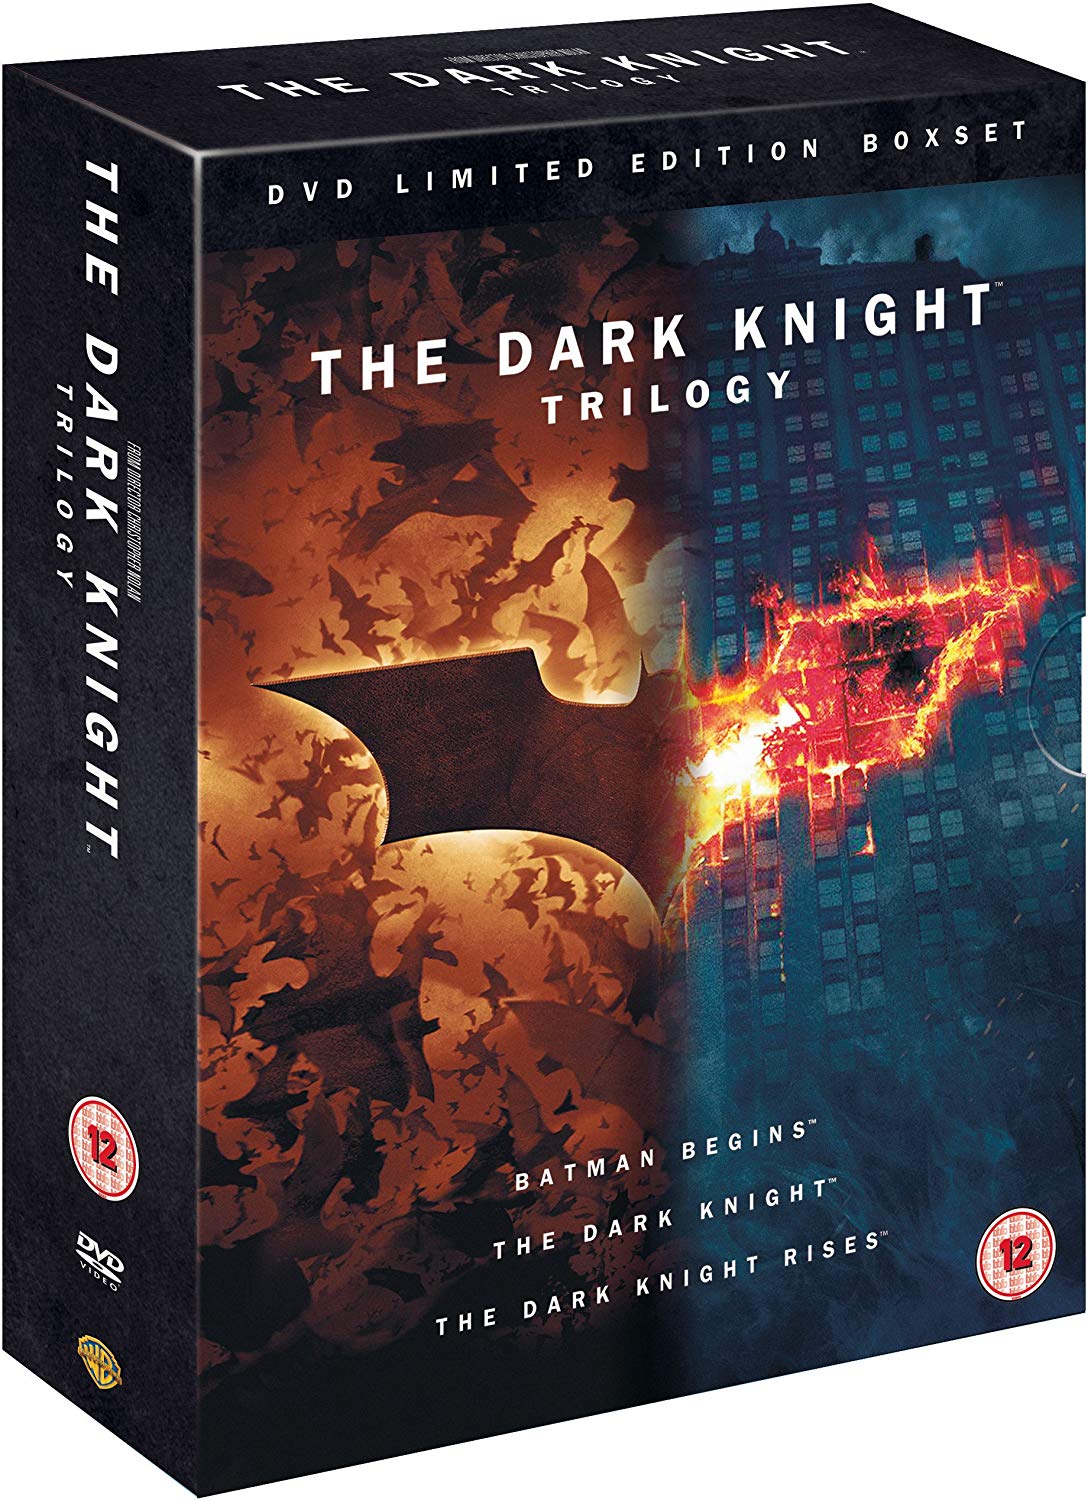 The Dark Knight, Superhero Films Wiki